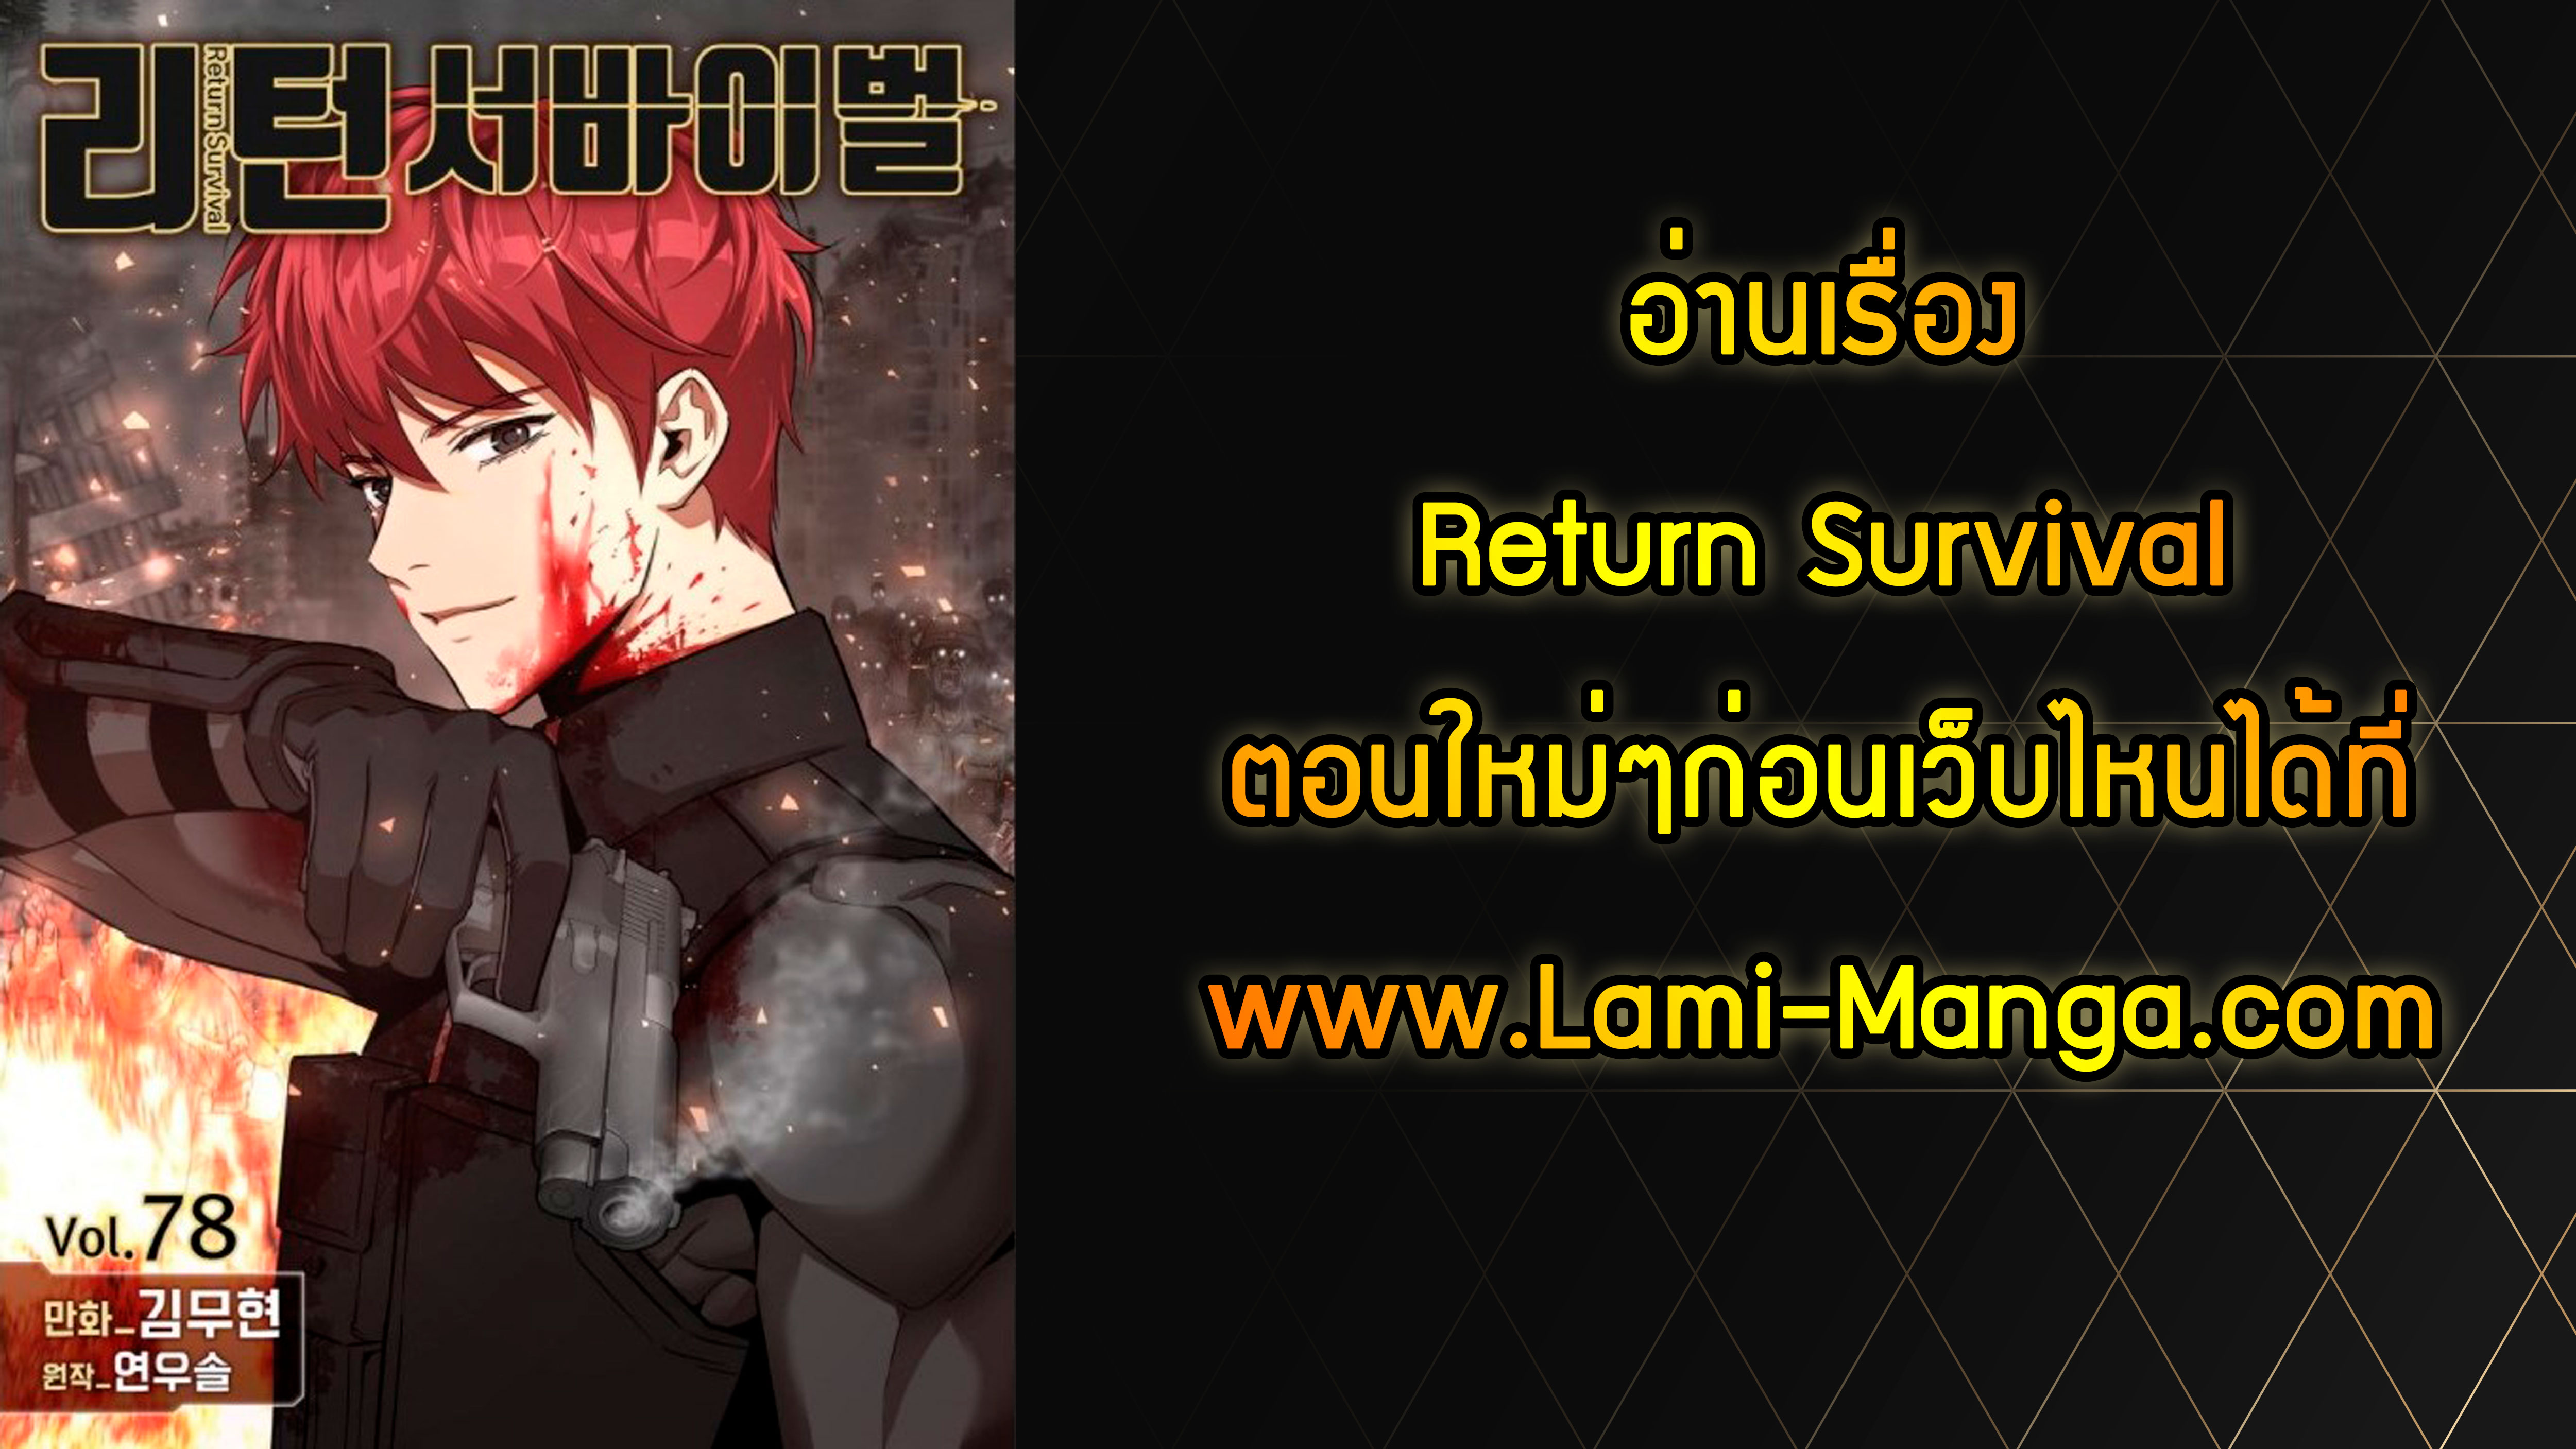 Return Survival 33 16